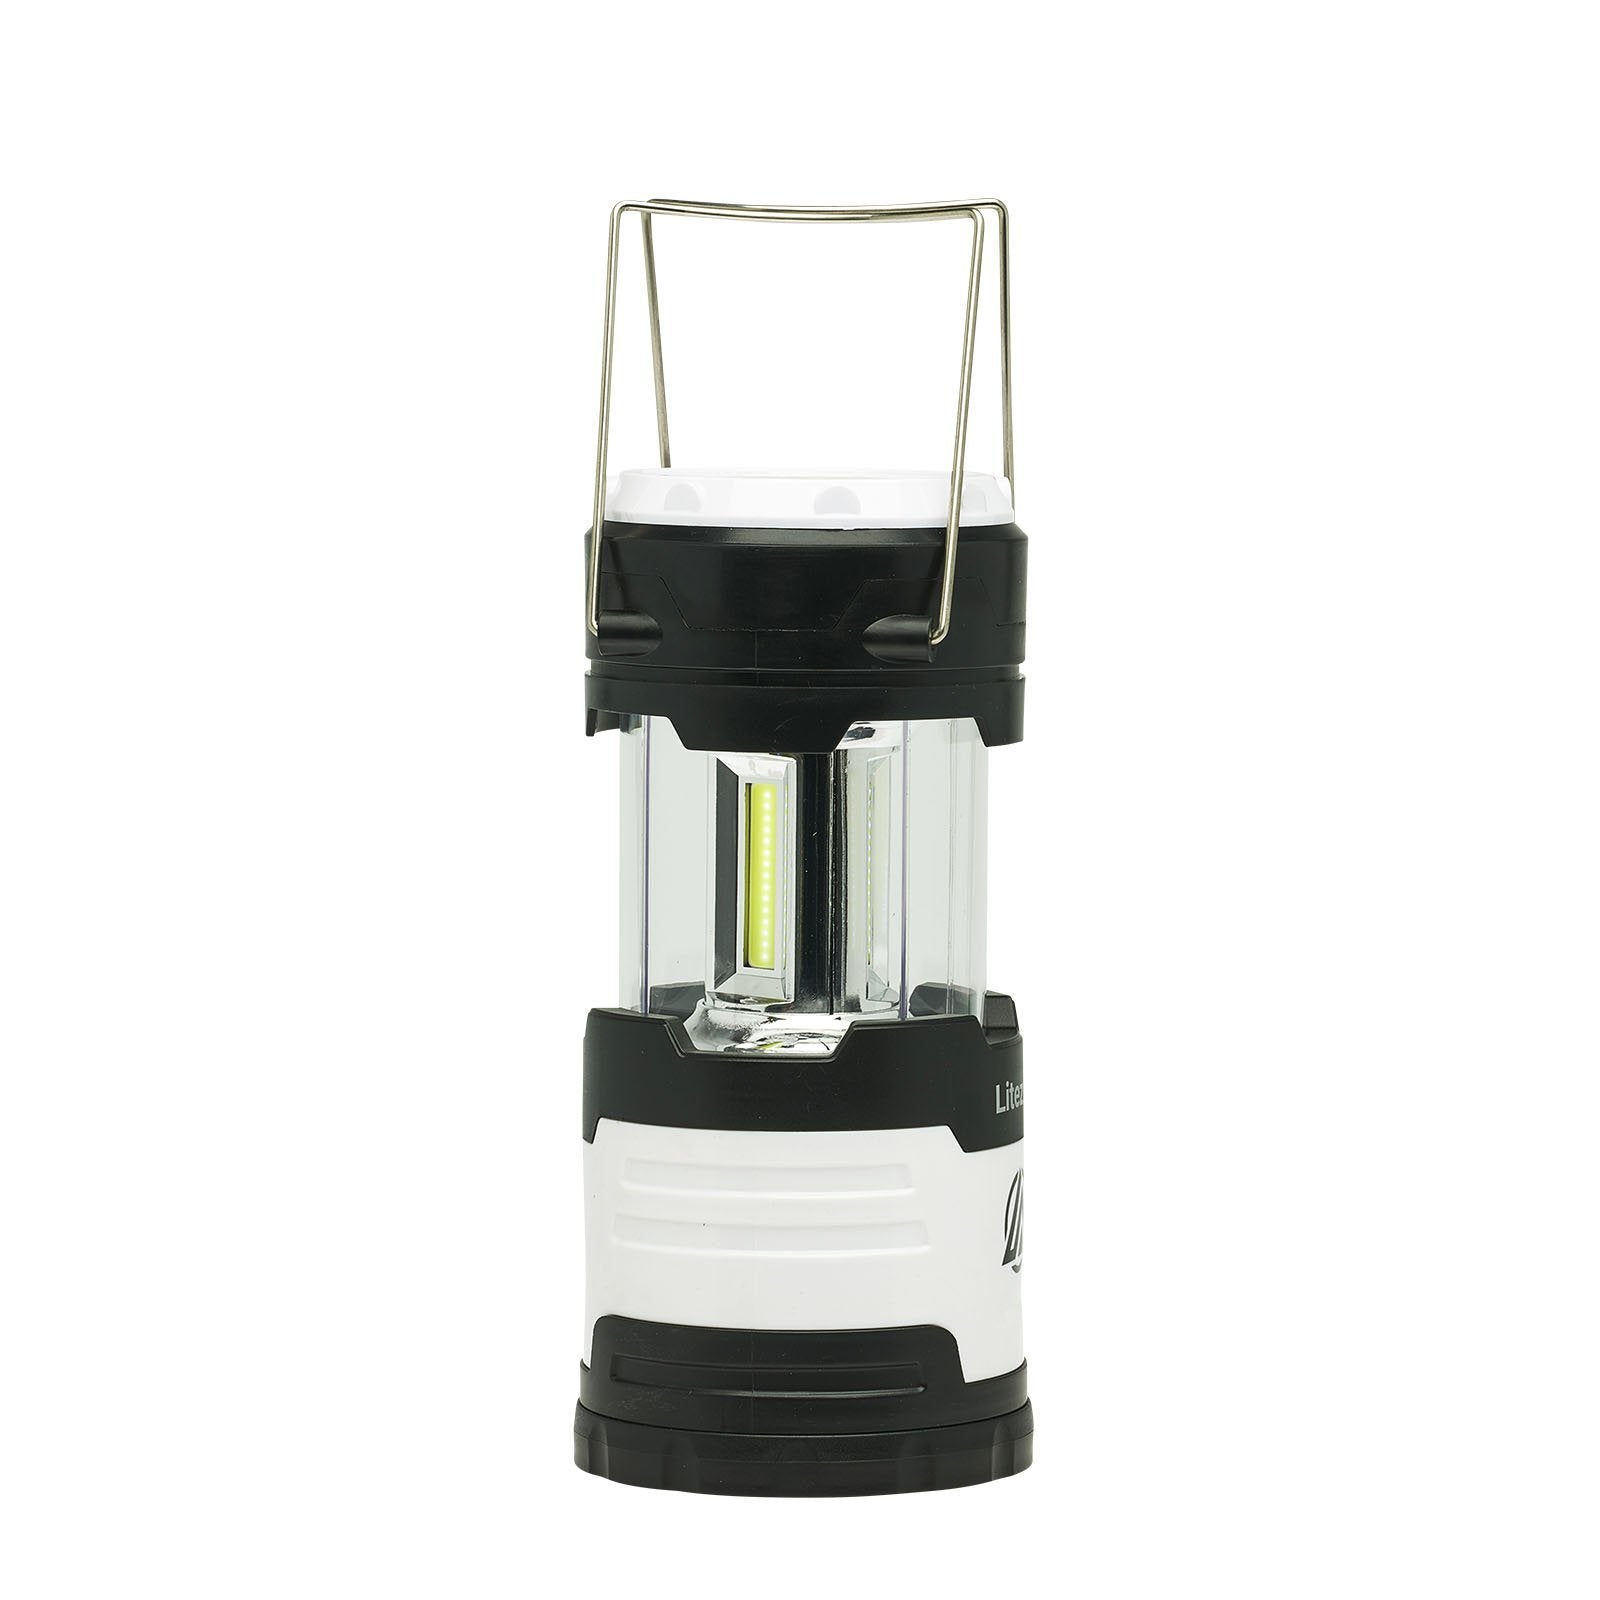 LitezAll Extendable COB LED Lantern - LitezAll - Lanterns - 13